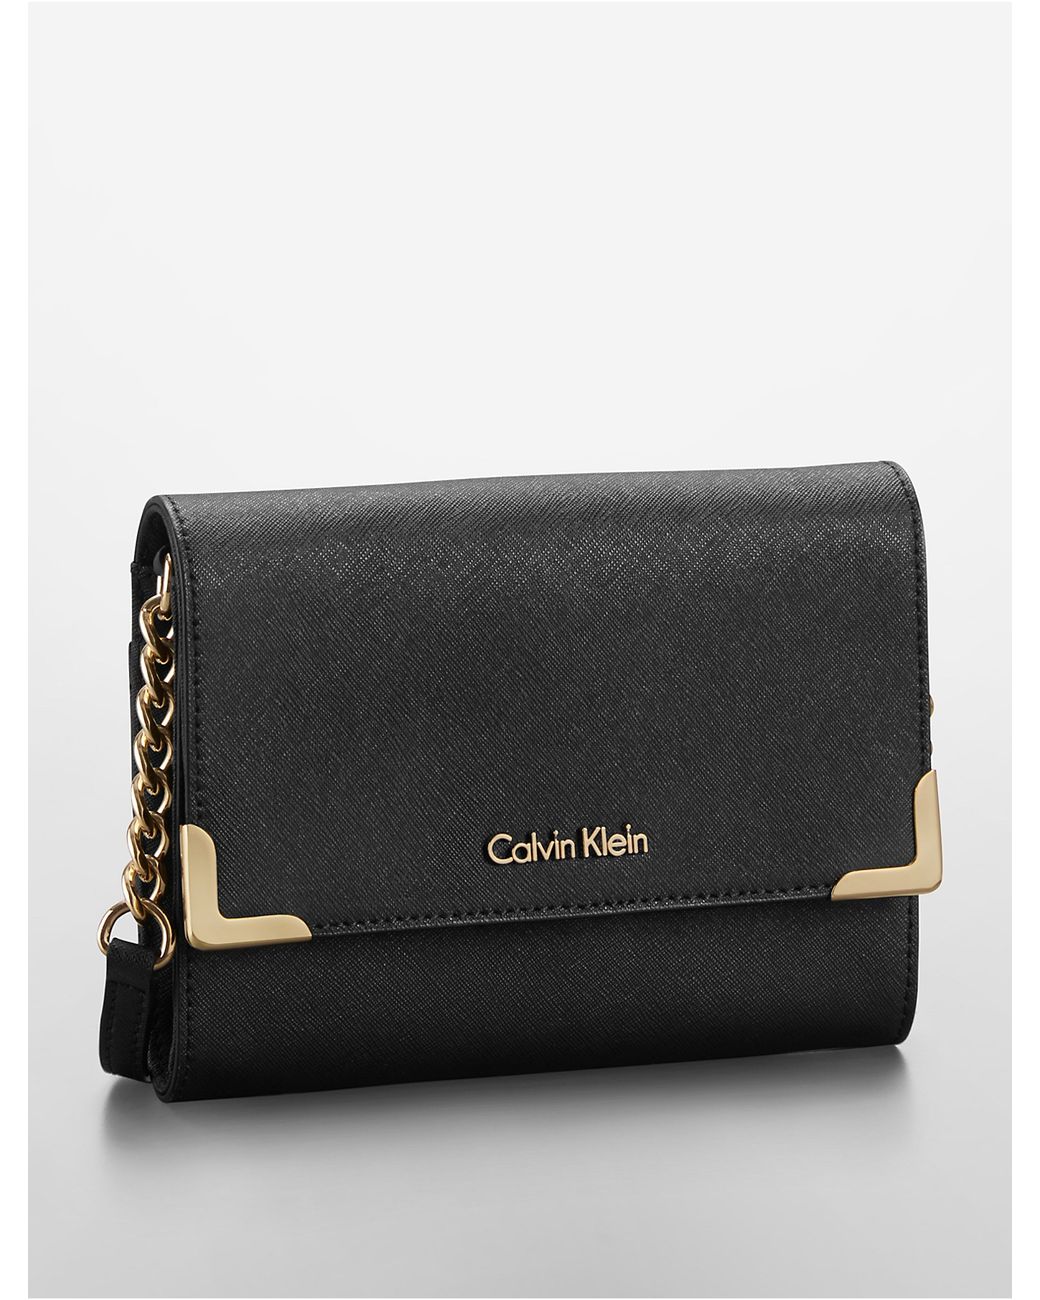 beklimmen ego Kiezen Calvin Klein Saffiano Leather Crossbody Bag in Black | Lyst